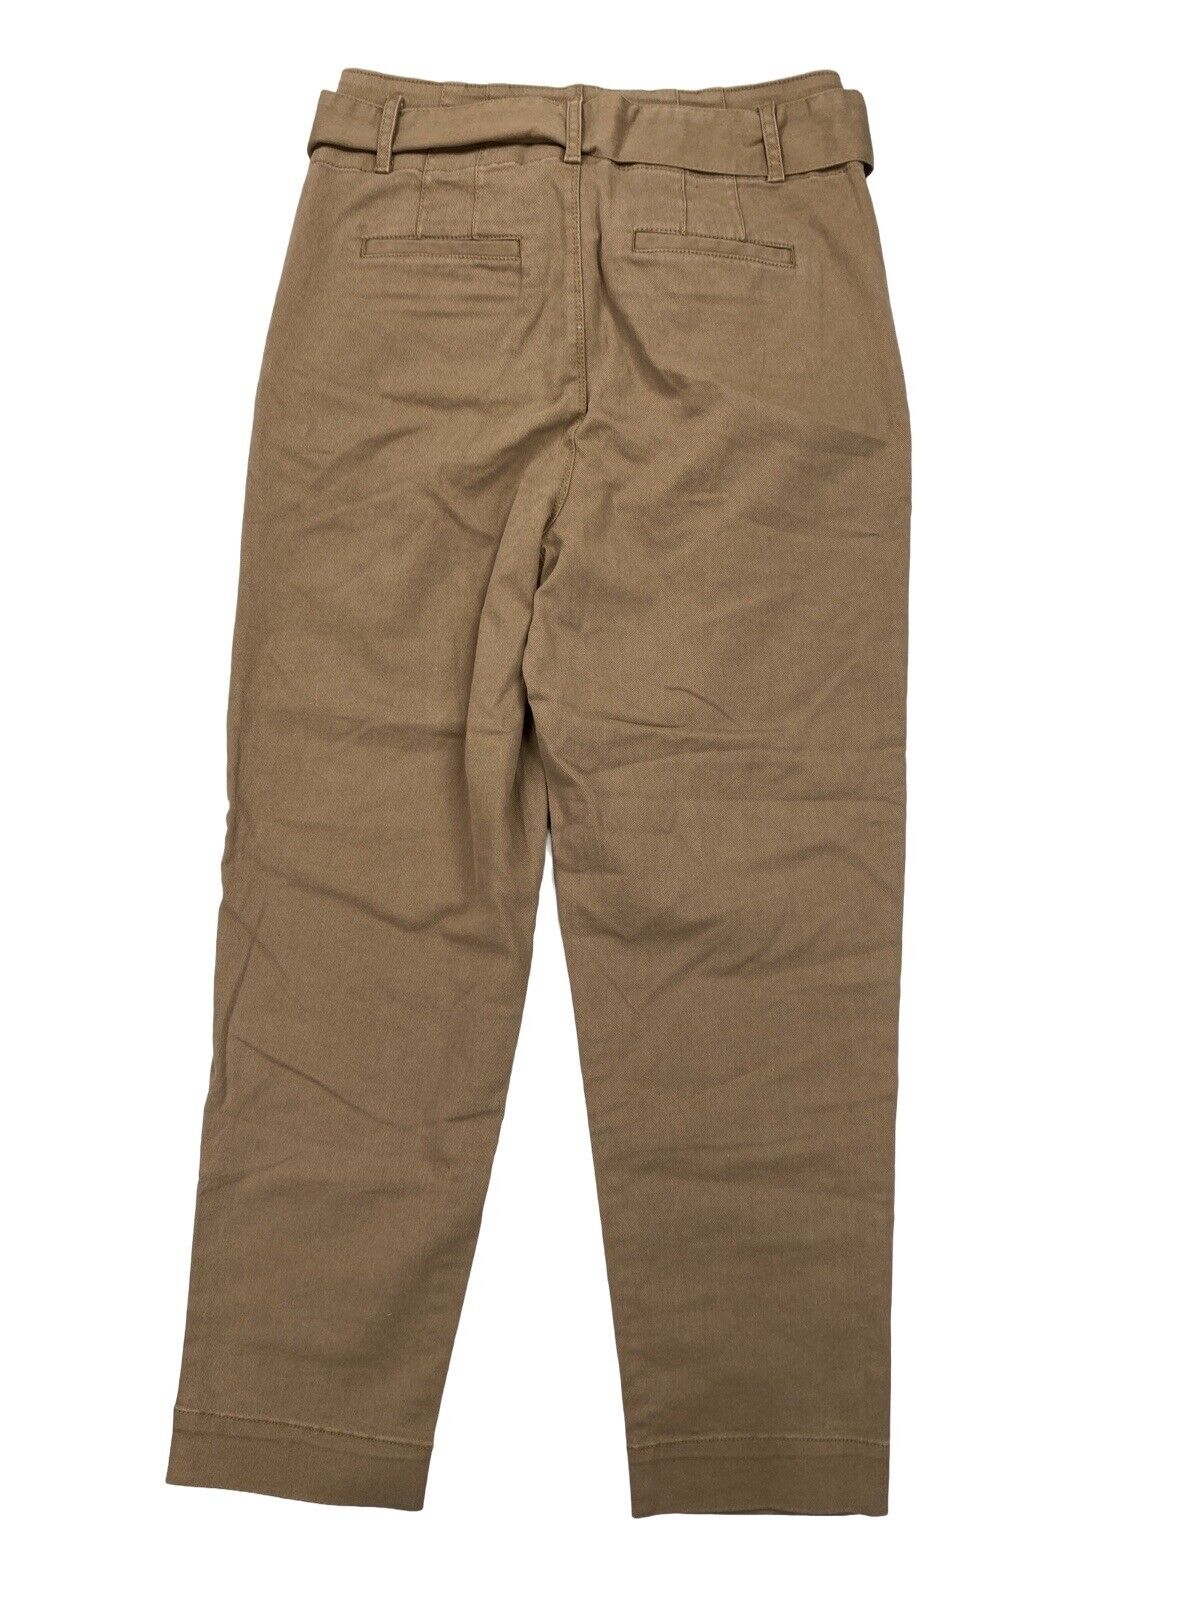 NEW LOFT Women's Brown Loose Fit Tie Front Pants - 4